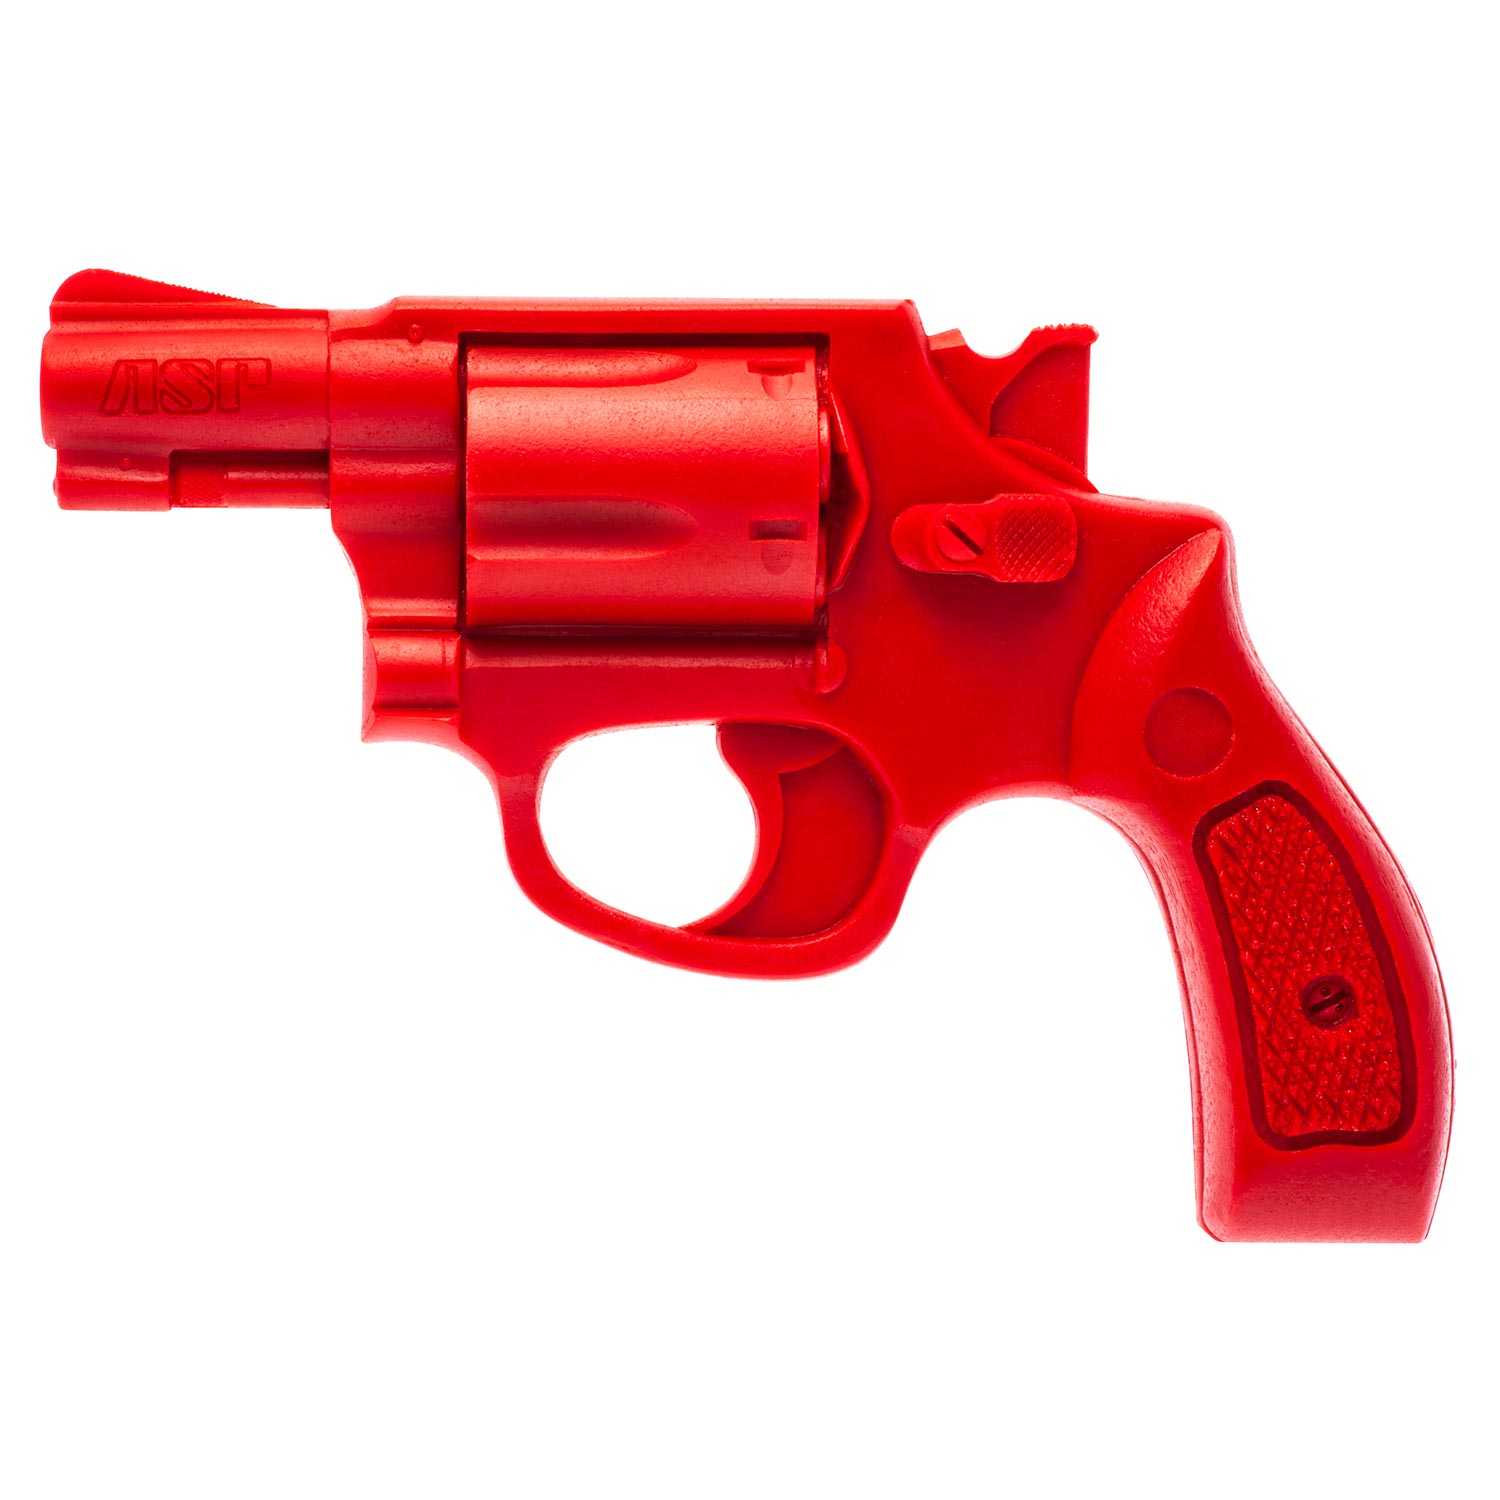 ASP Red Gun Smith & Wesson J Frame Training Gun